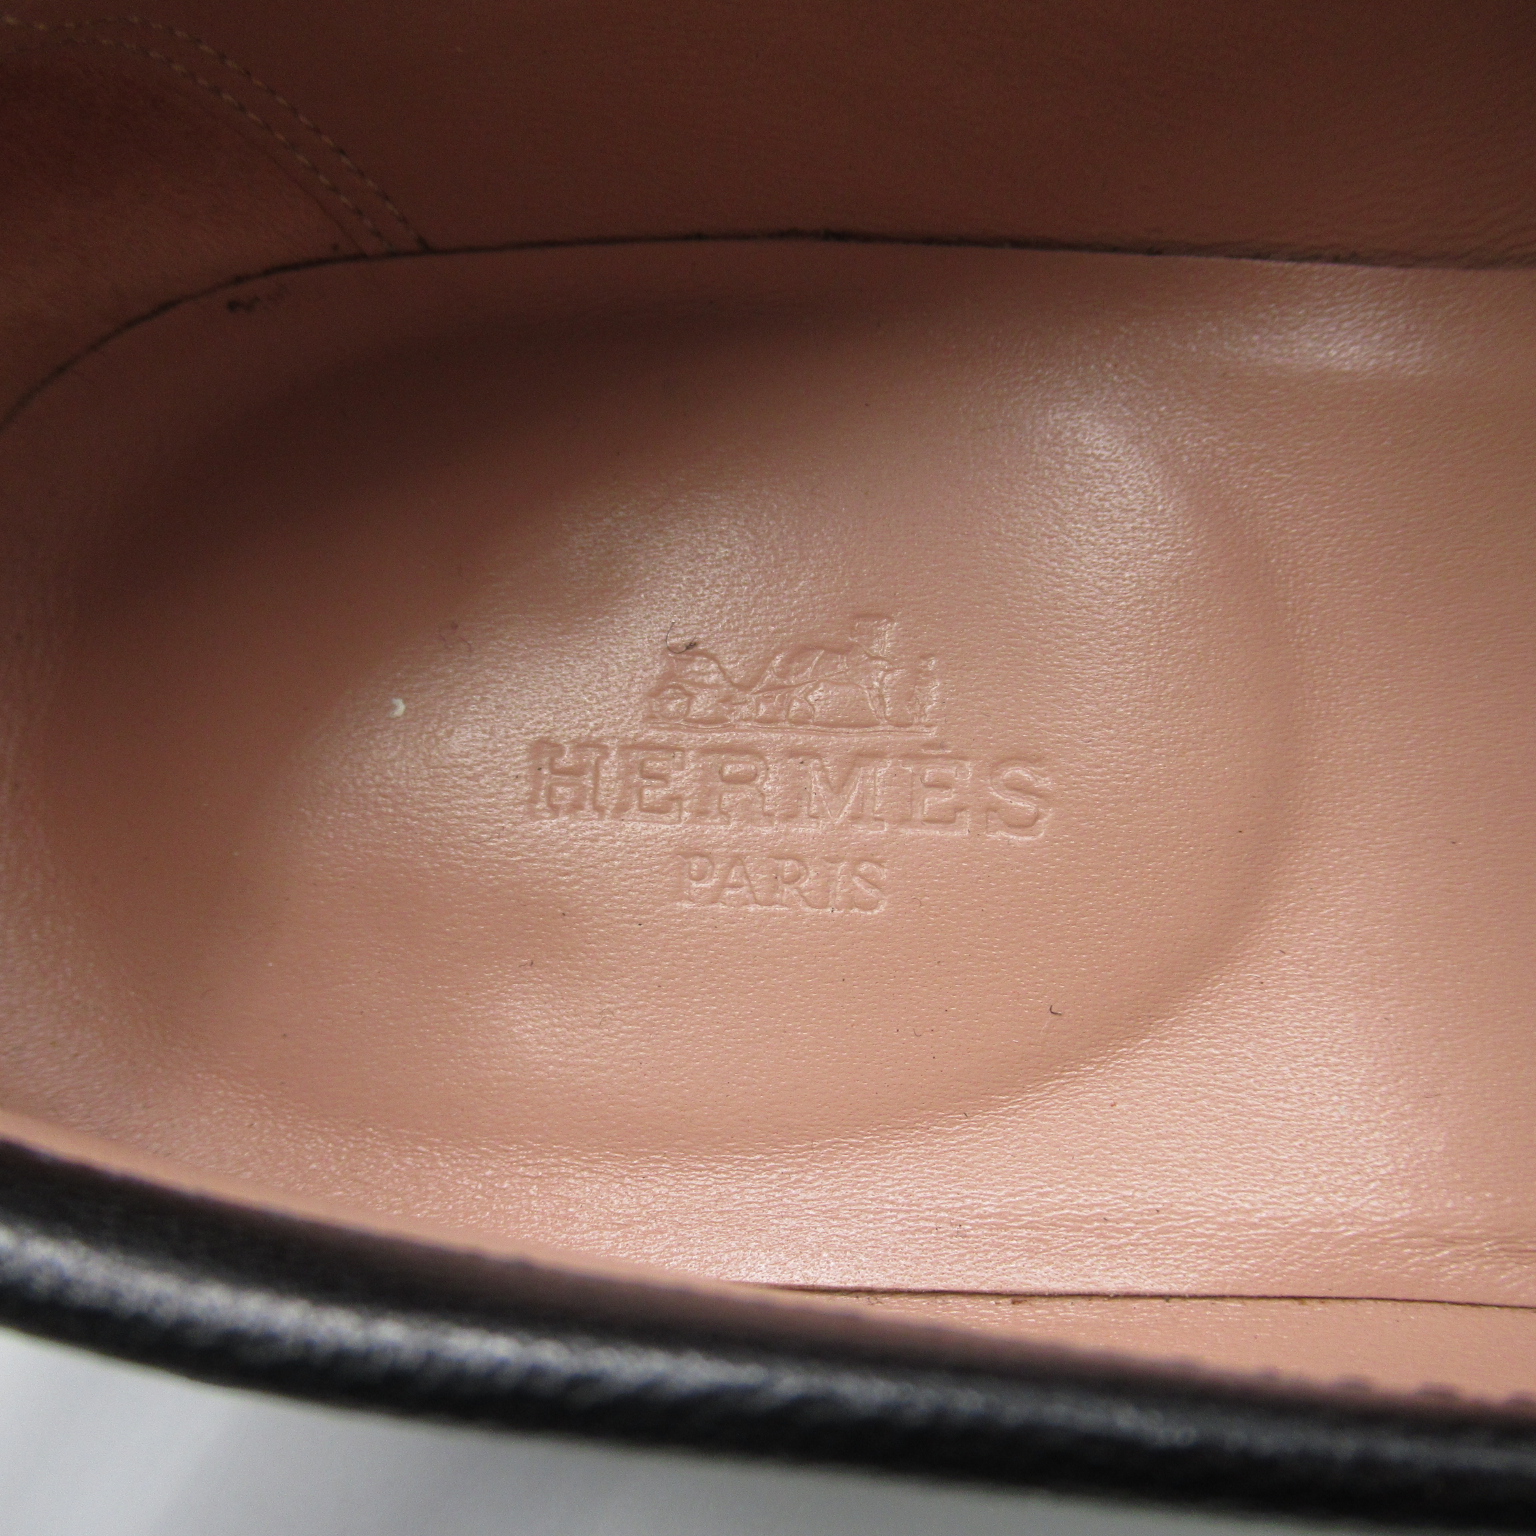  Hermes мокасины Париж бренд off HERMES кожа мокасины кожа б/у мужской женский 